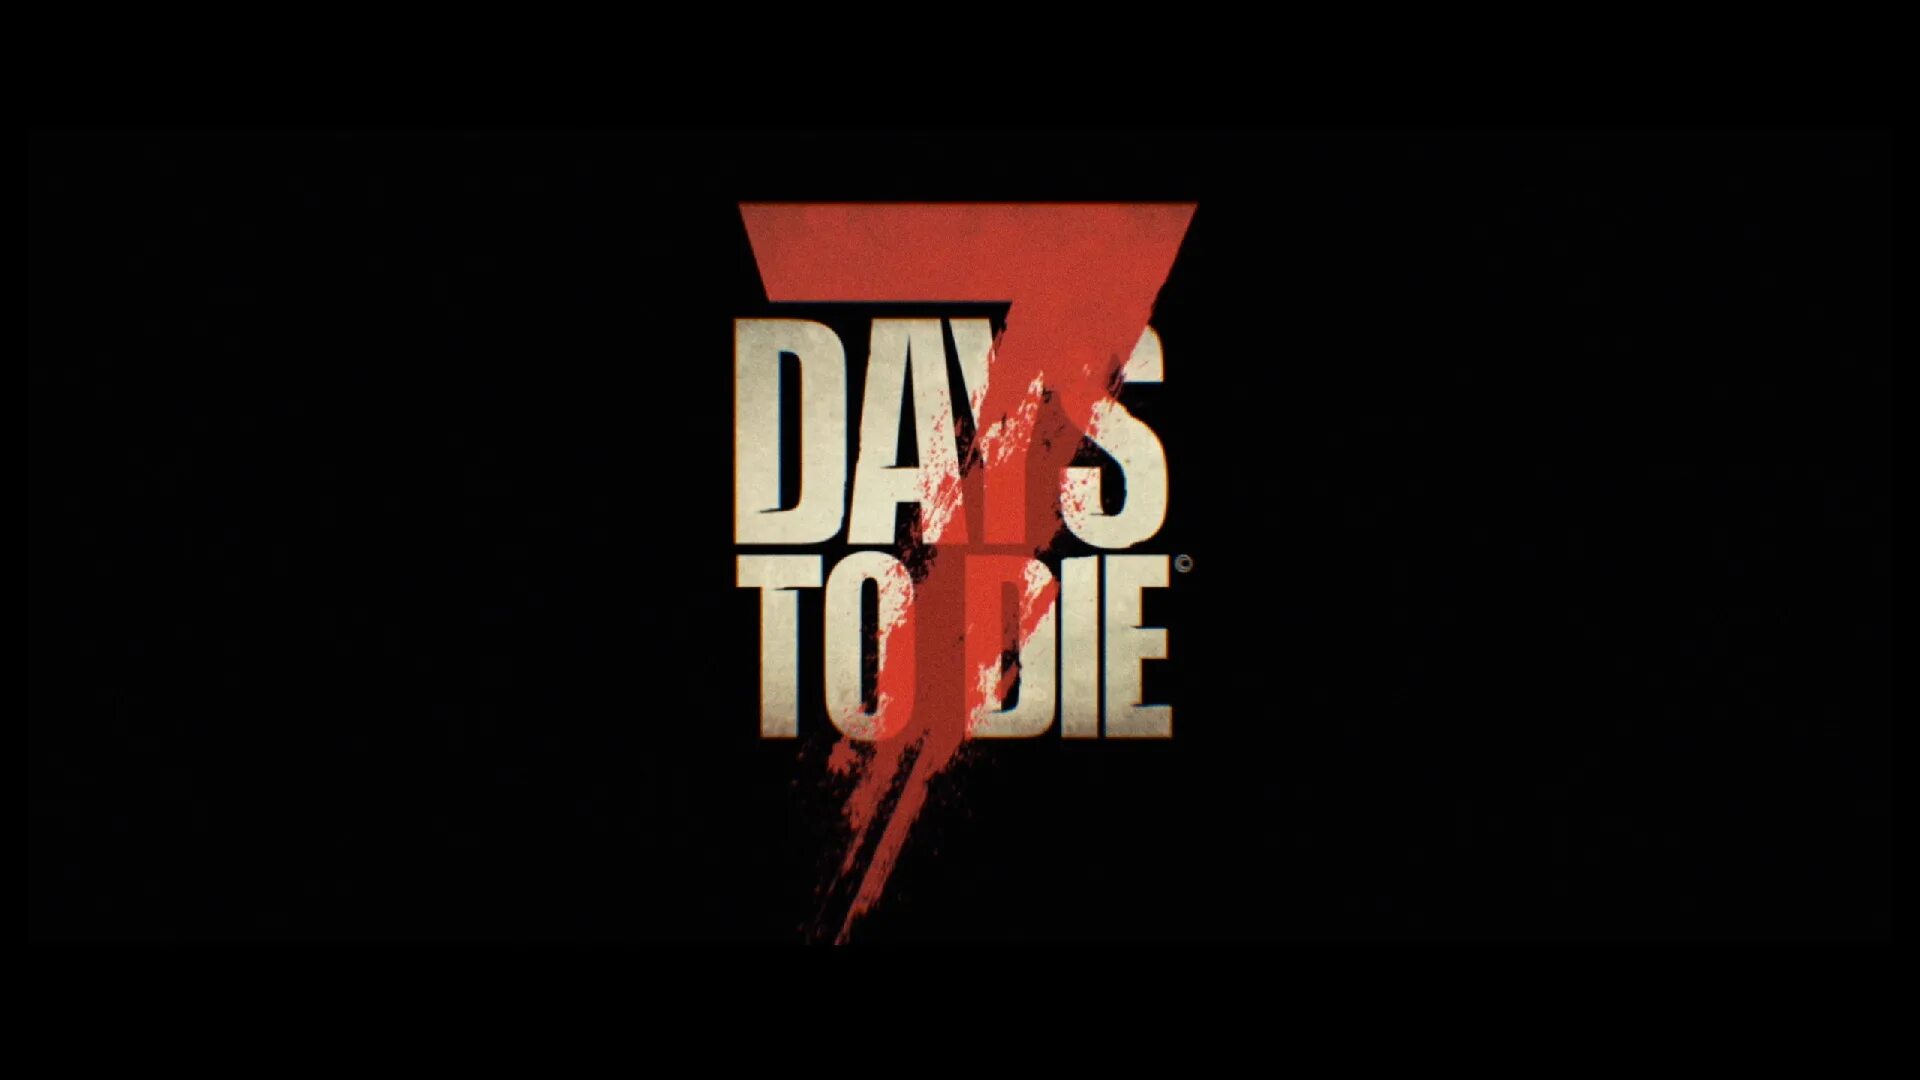 7 Days to die значок. 7dtd лого. 7 Days to die ярлык. 7 Дей ту дей логотип. 7 days ru